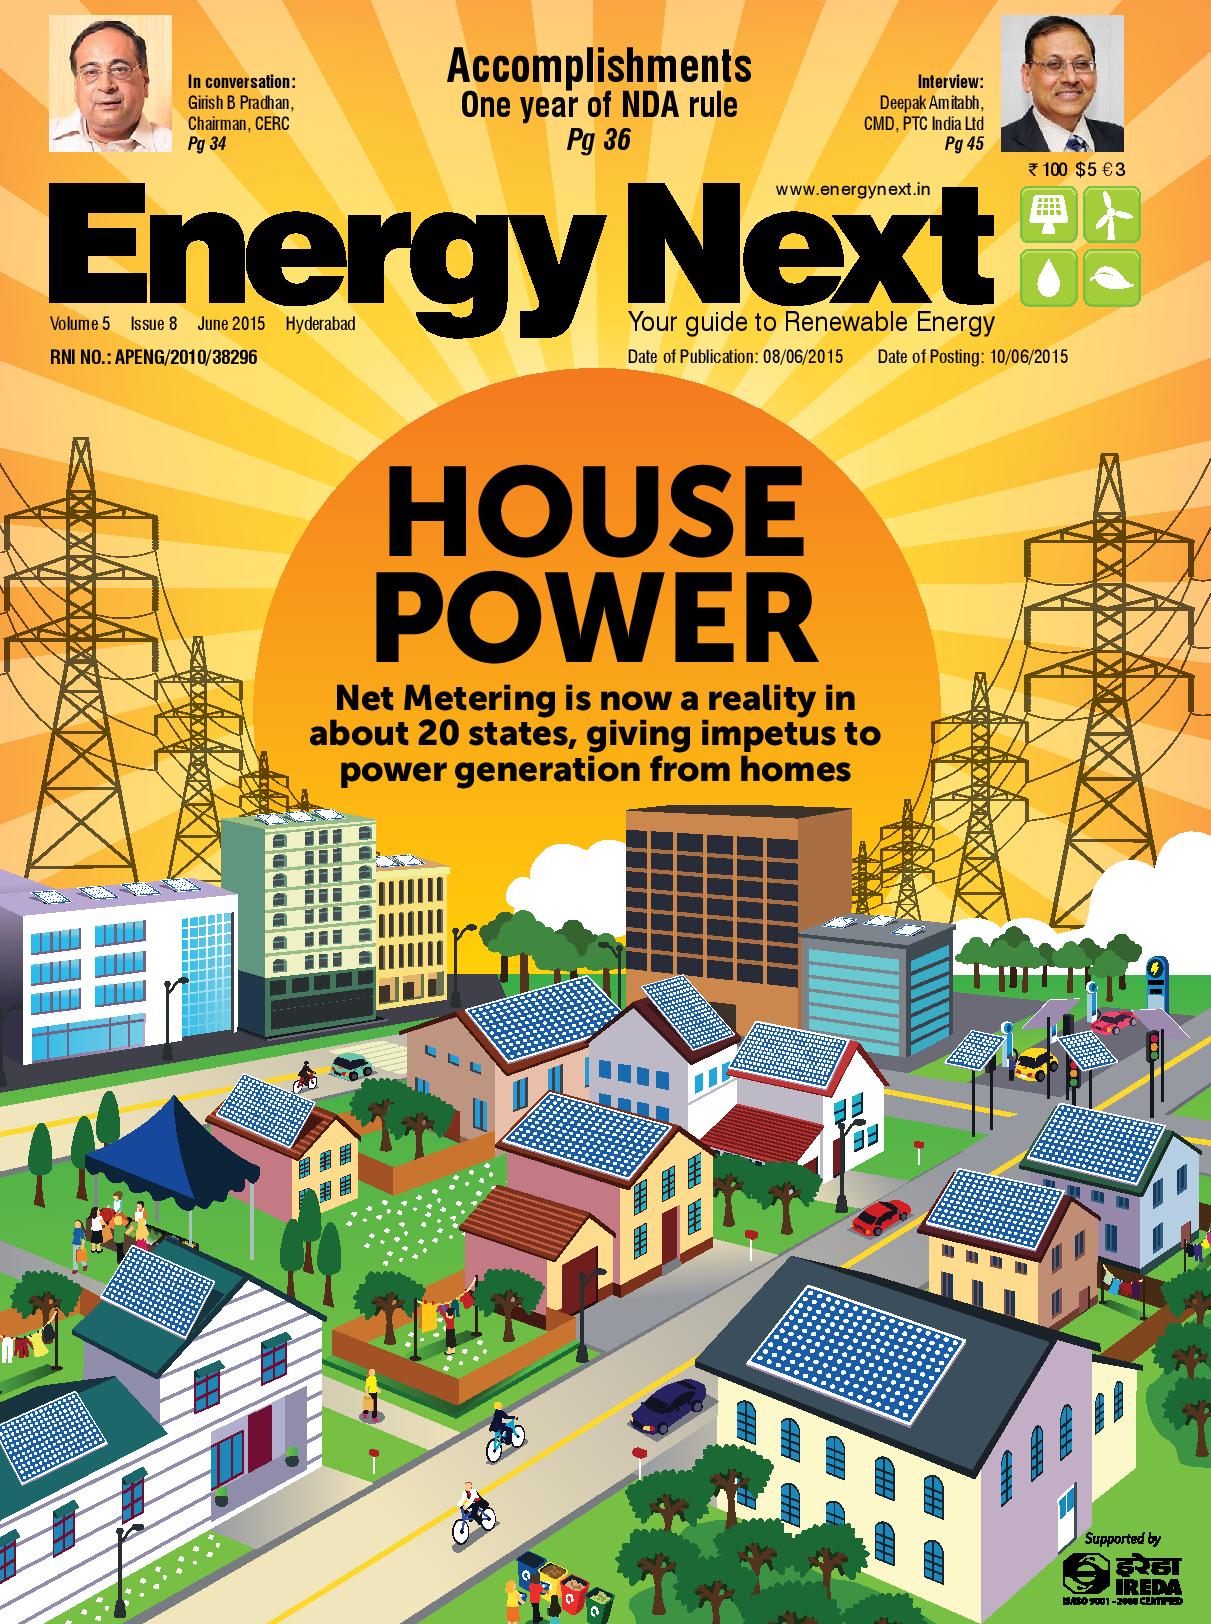 EnergyNext Vol 05 issue 8 Jun 2015